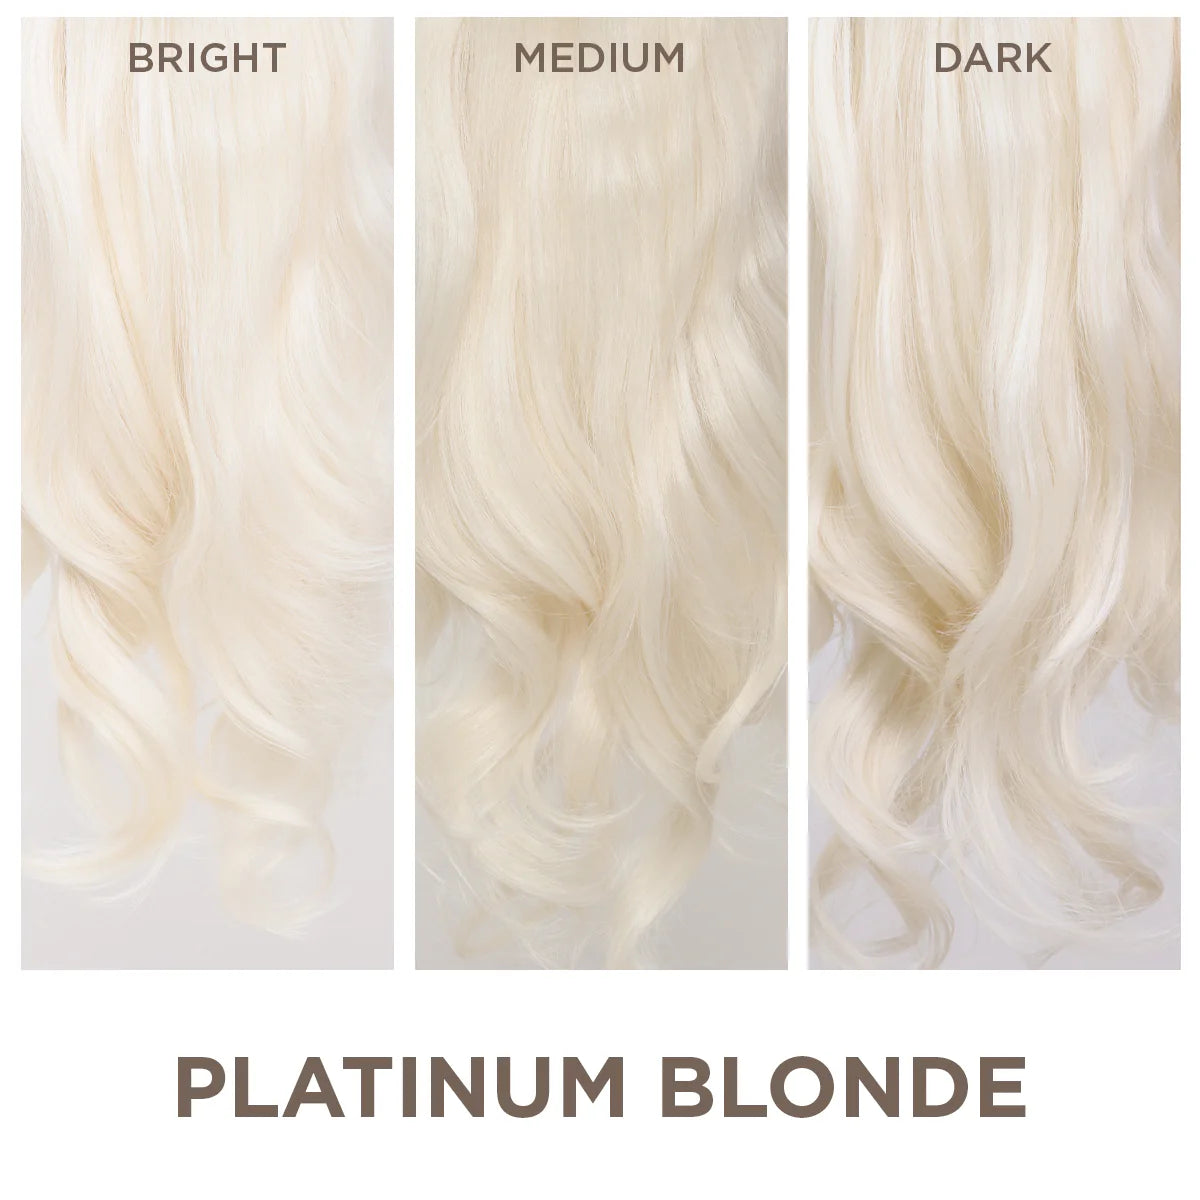 Platinum Blonde + 1 FREE HALO